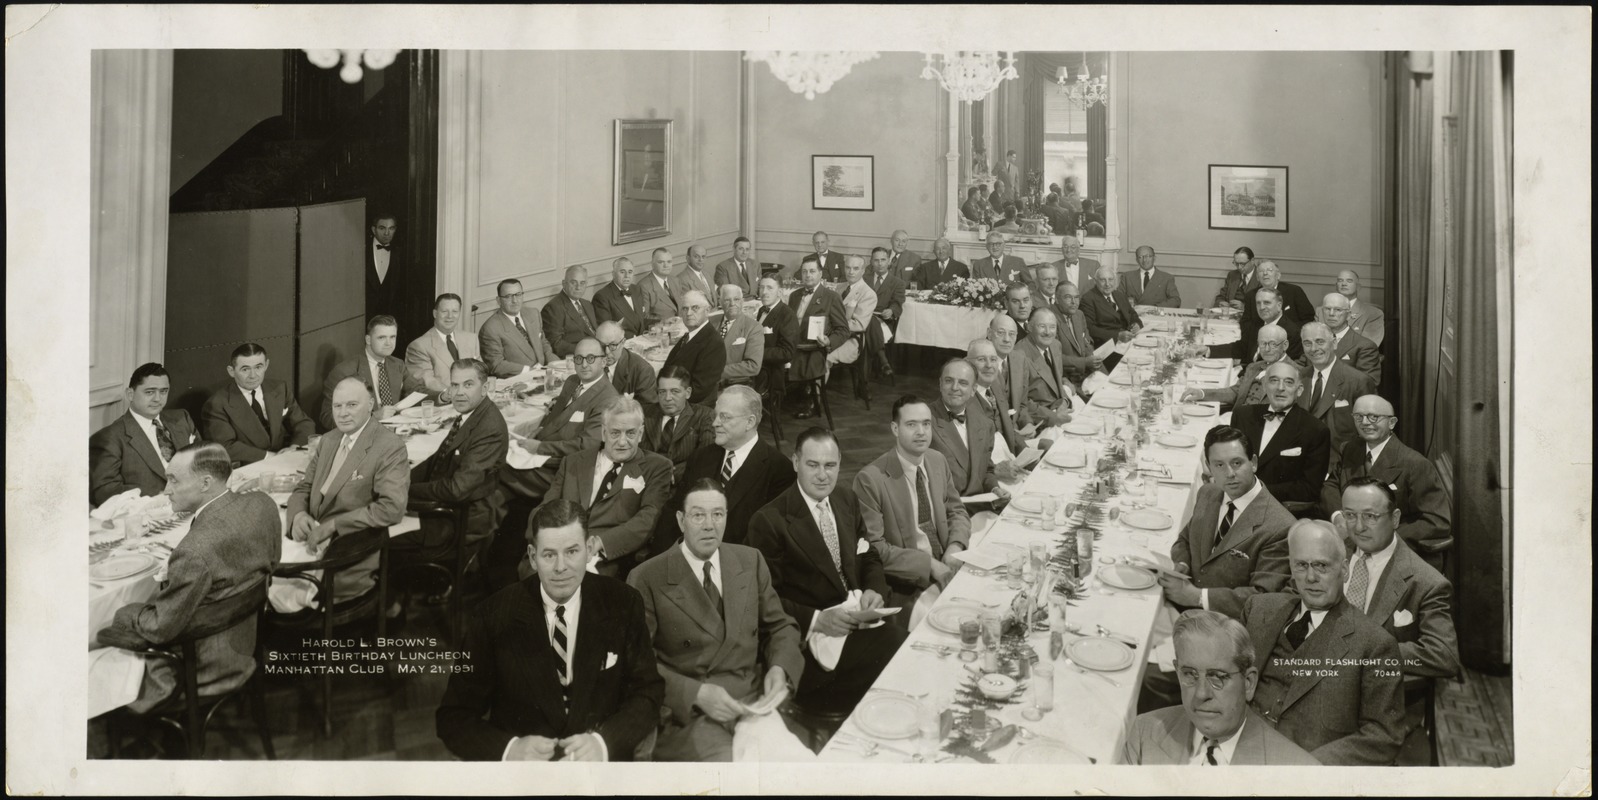 Harold L. Brown's Sixtieth Birthday Luncheon, New York, 1951 [graphic]